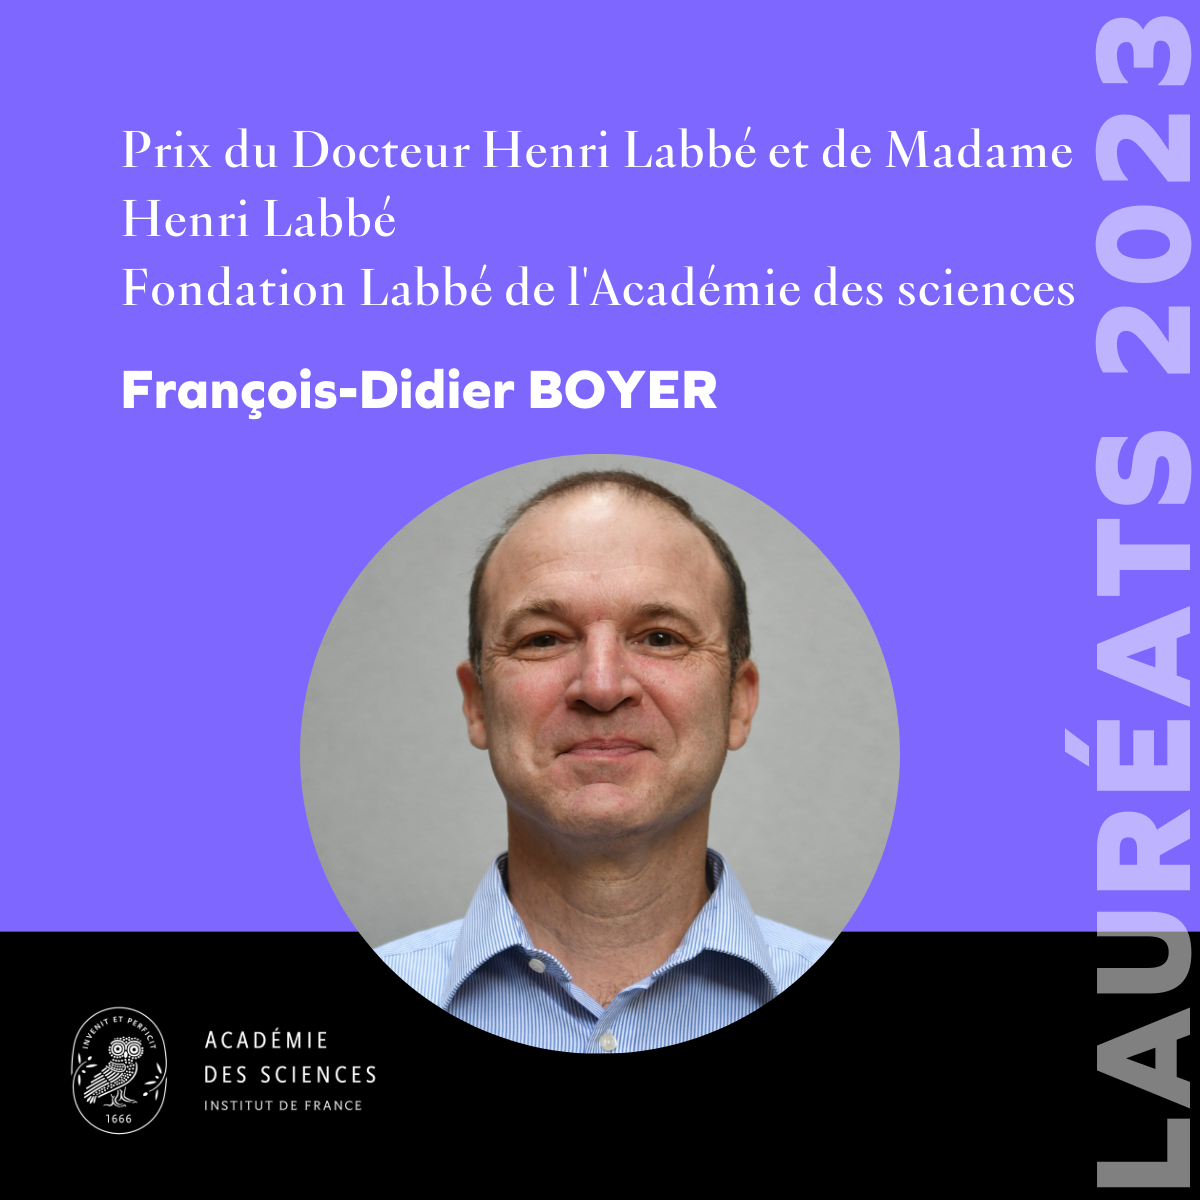 François-Didier Boyer